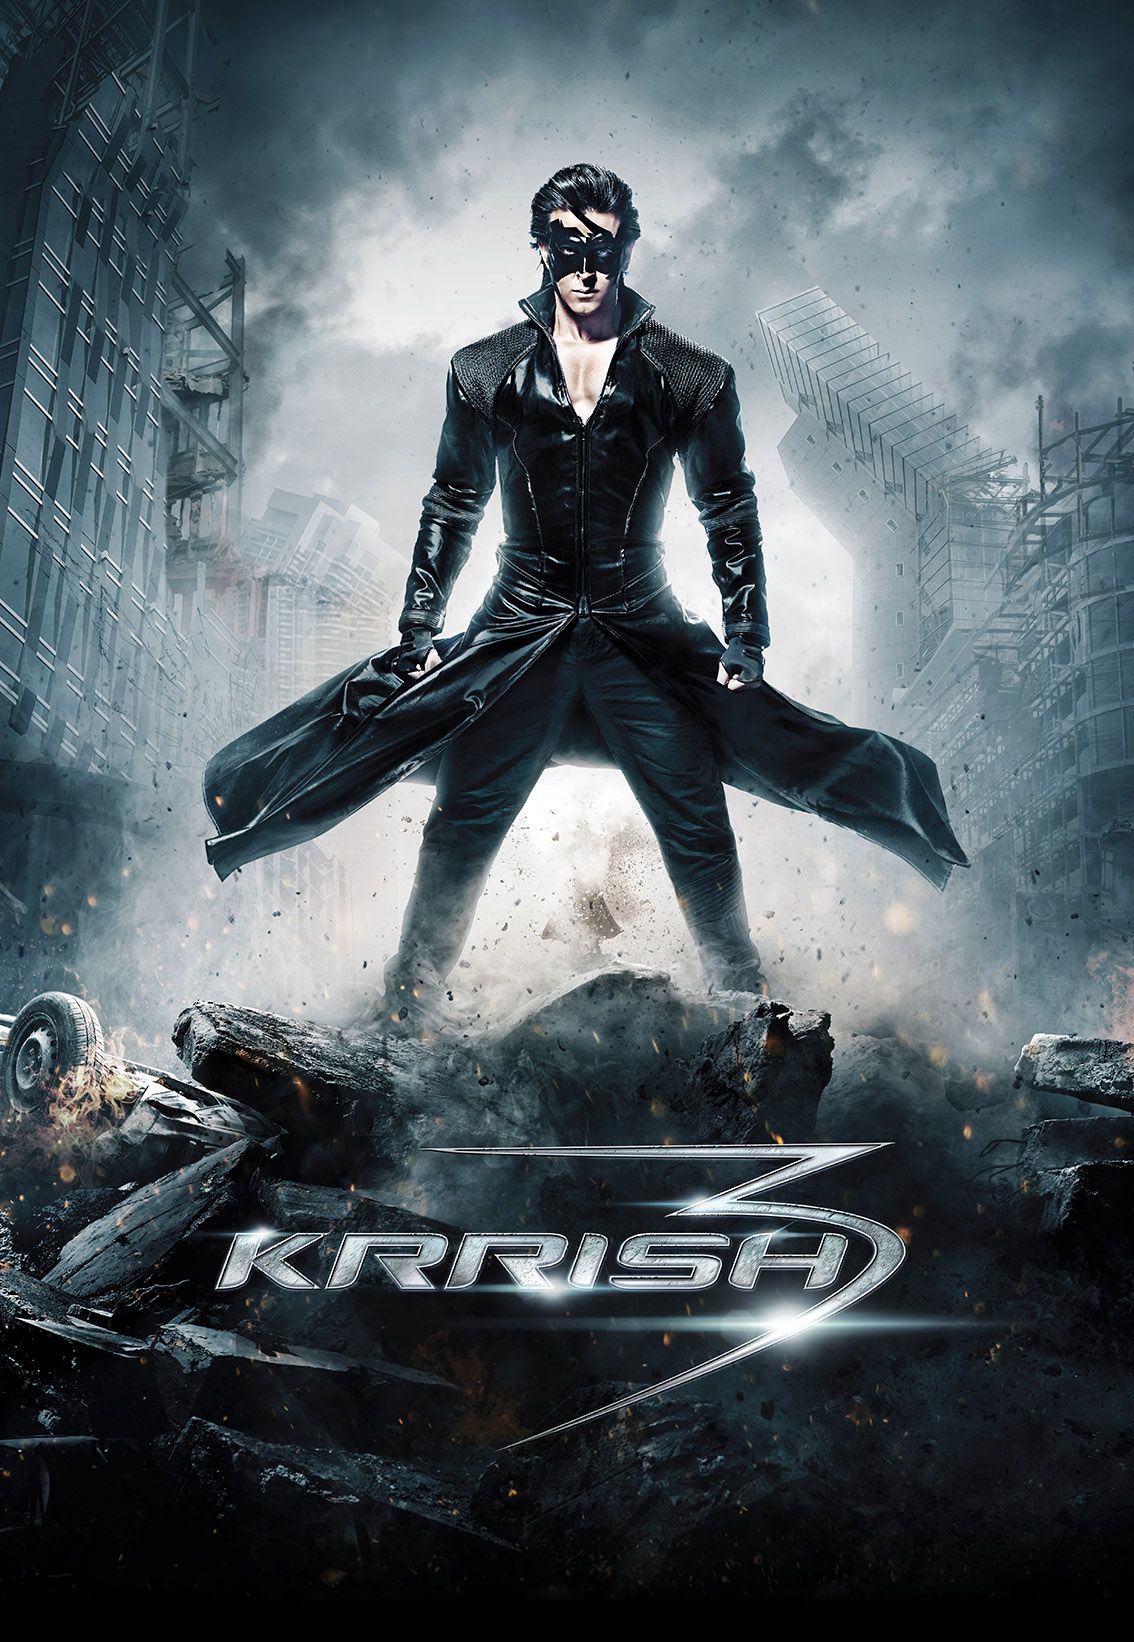 Krrish 3 Movie Poster Design. Krrish movie, Bollywood movie, Krrish 3